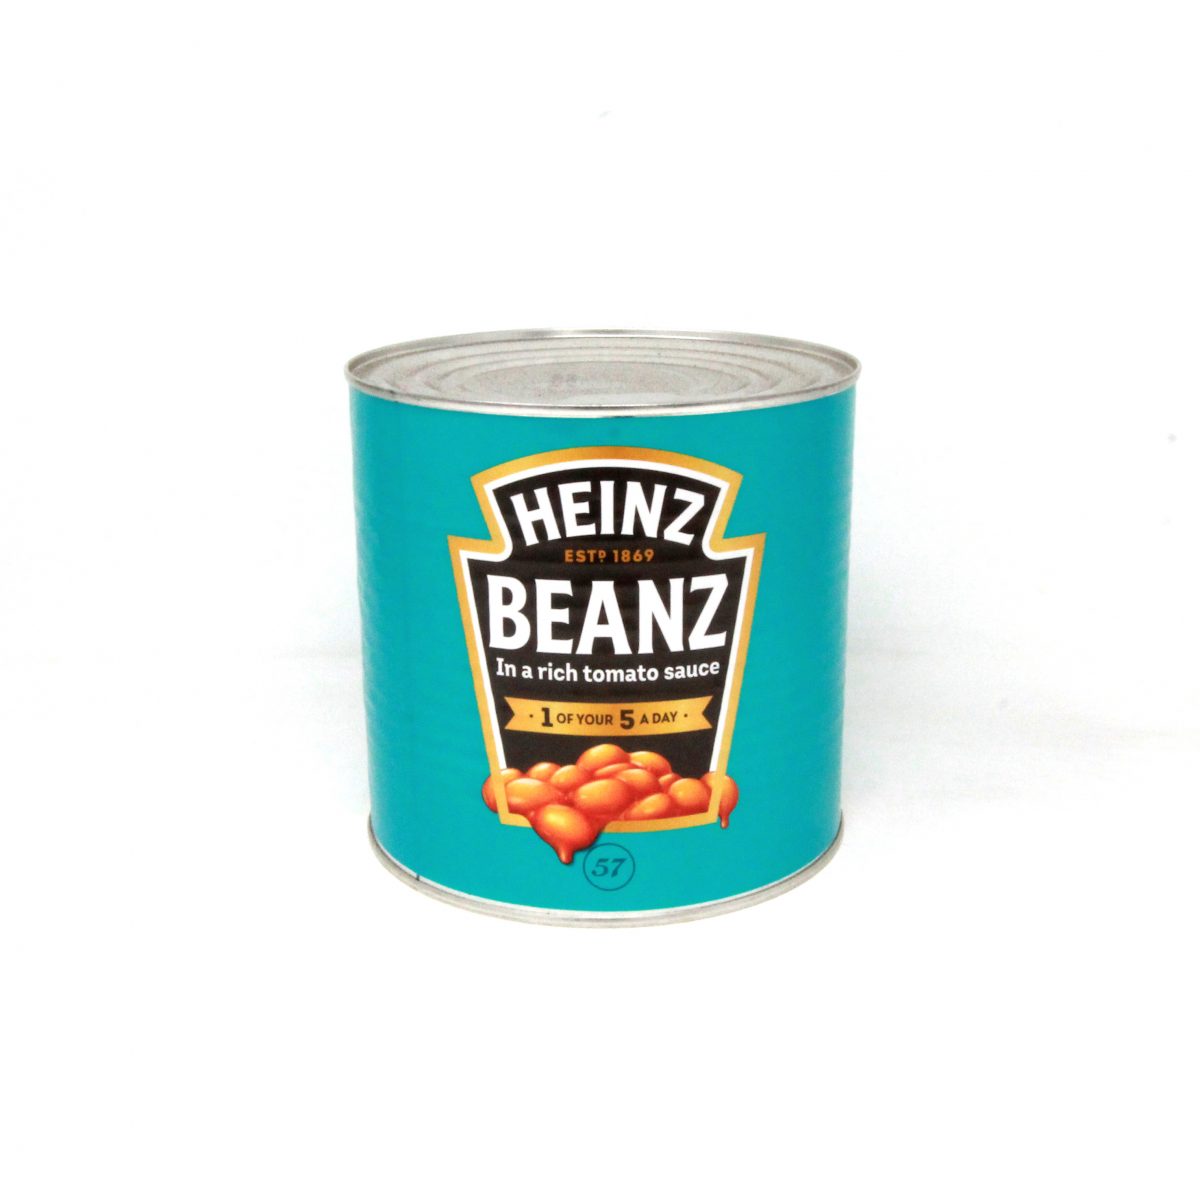 Heinz-Beanz-in-a-Rich-Tomato-Sauce